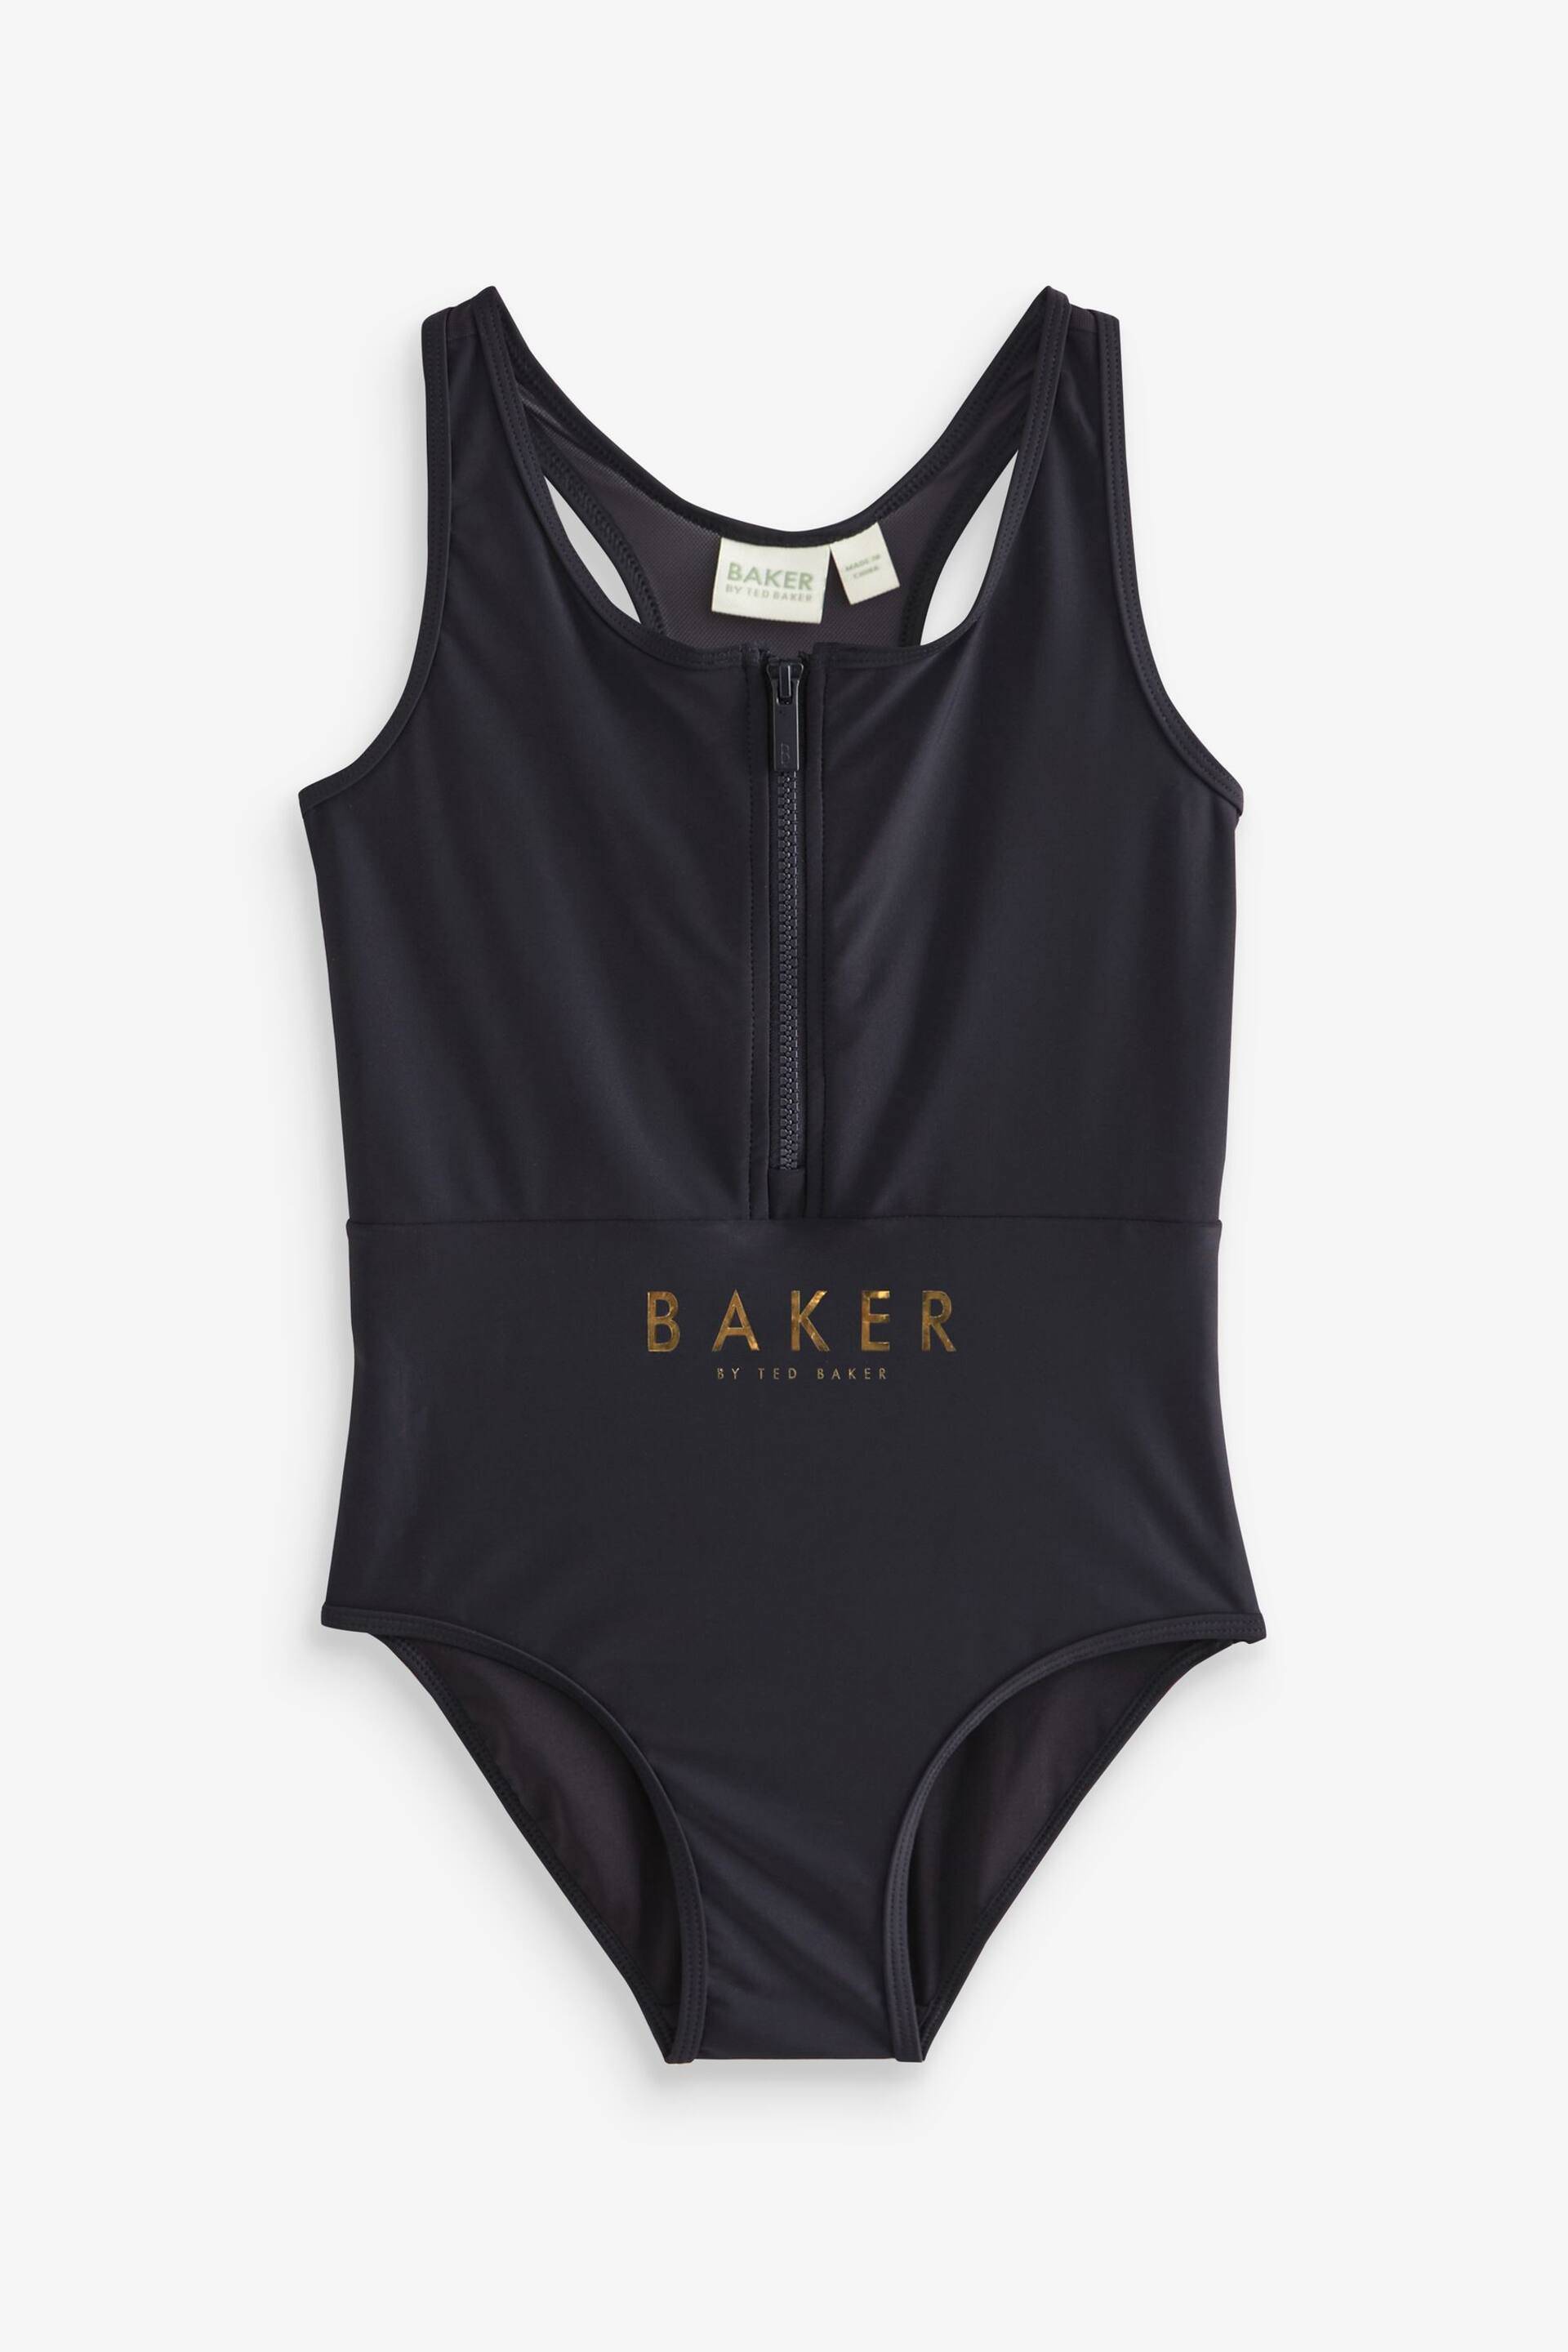 Baker by Ted Baker Navy Zip Swimsuit - Image 2 of 5